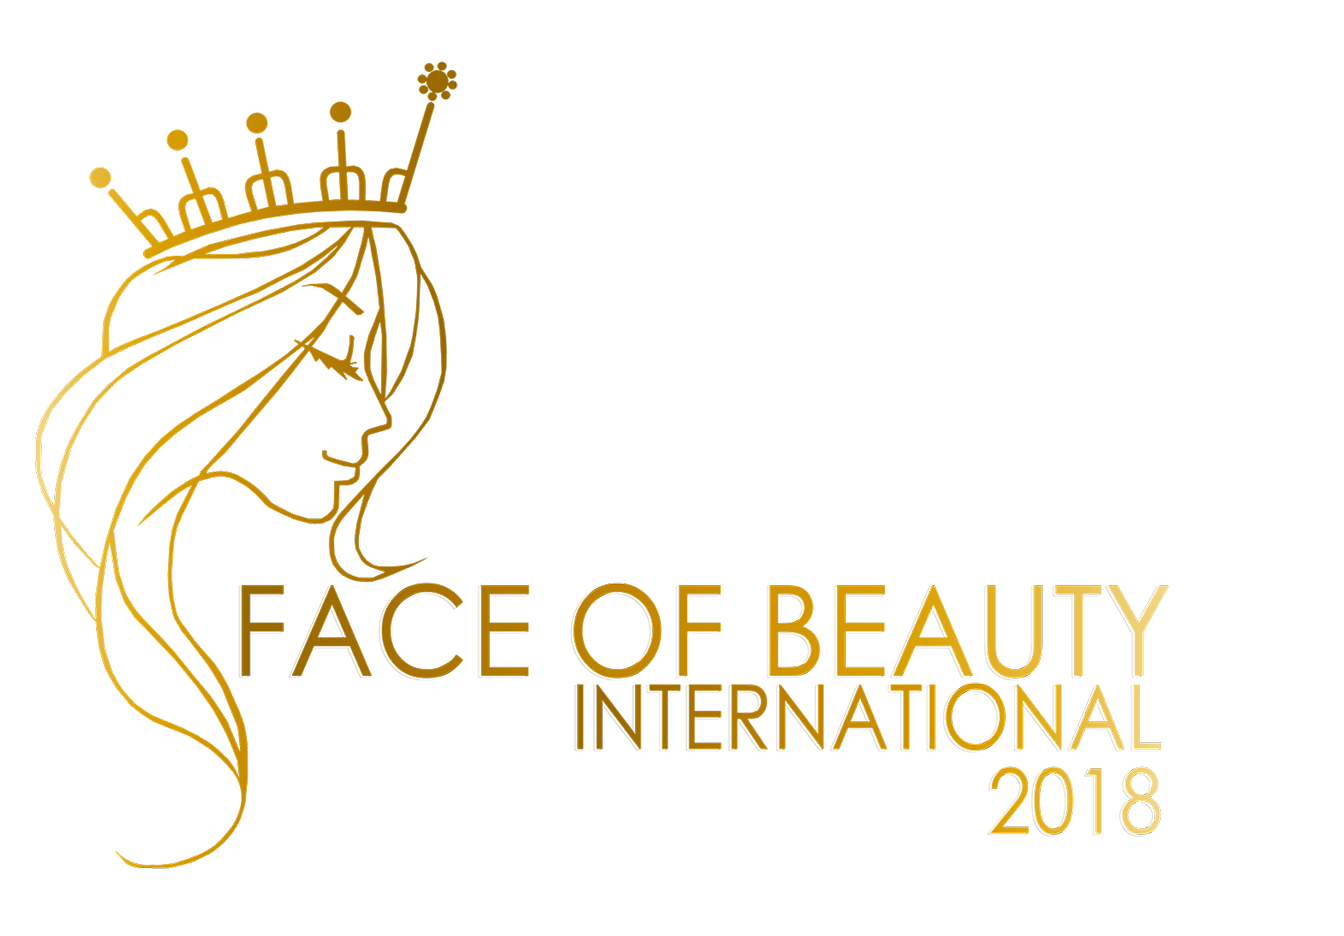 FACE OF BEAUTY INTERNATIONAL 2018